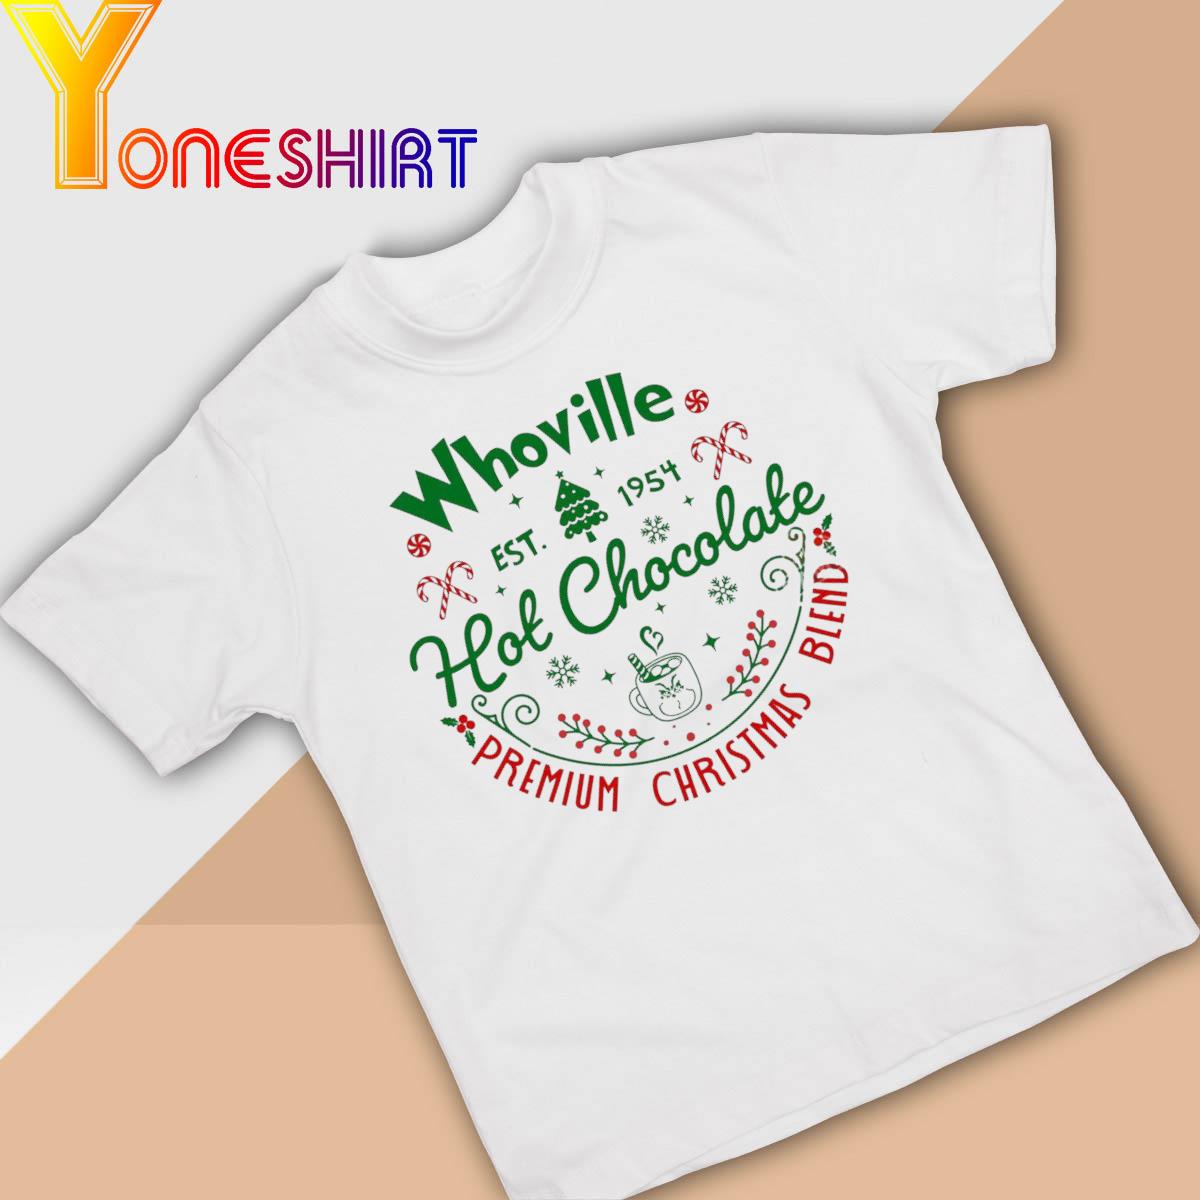 Whoville Hot Chocolat Christmas Movie Shirt